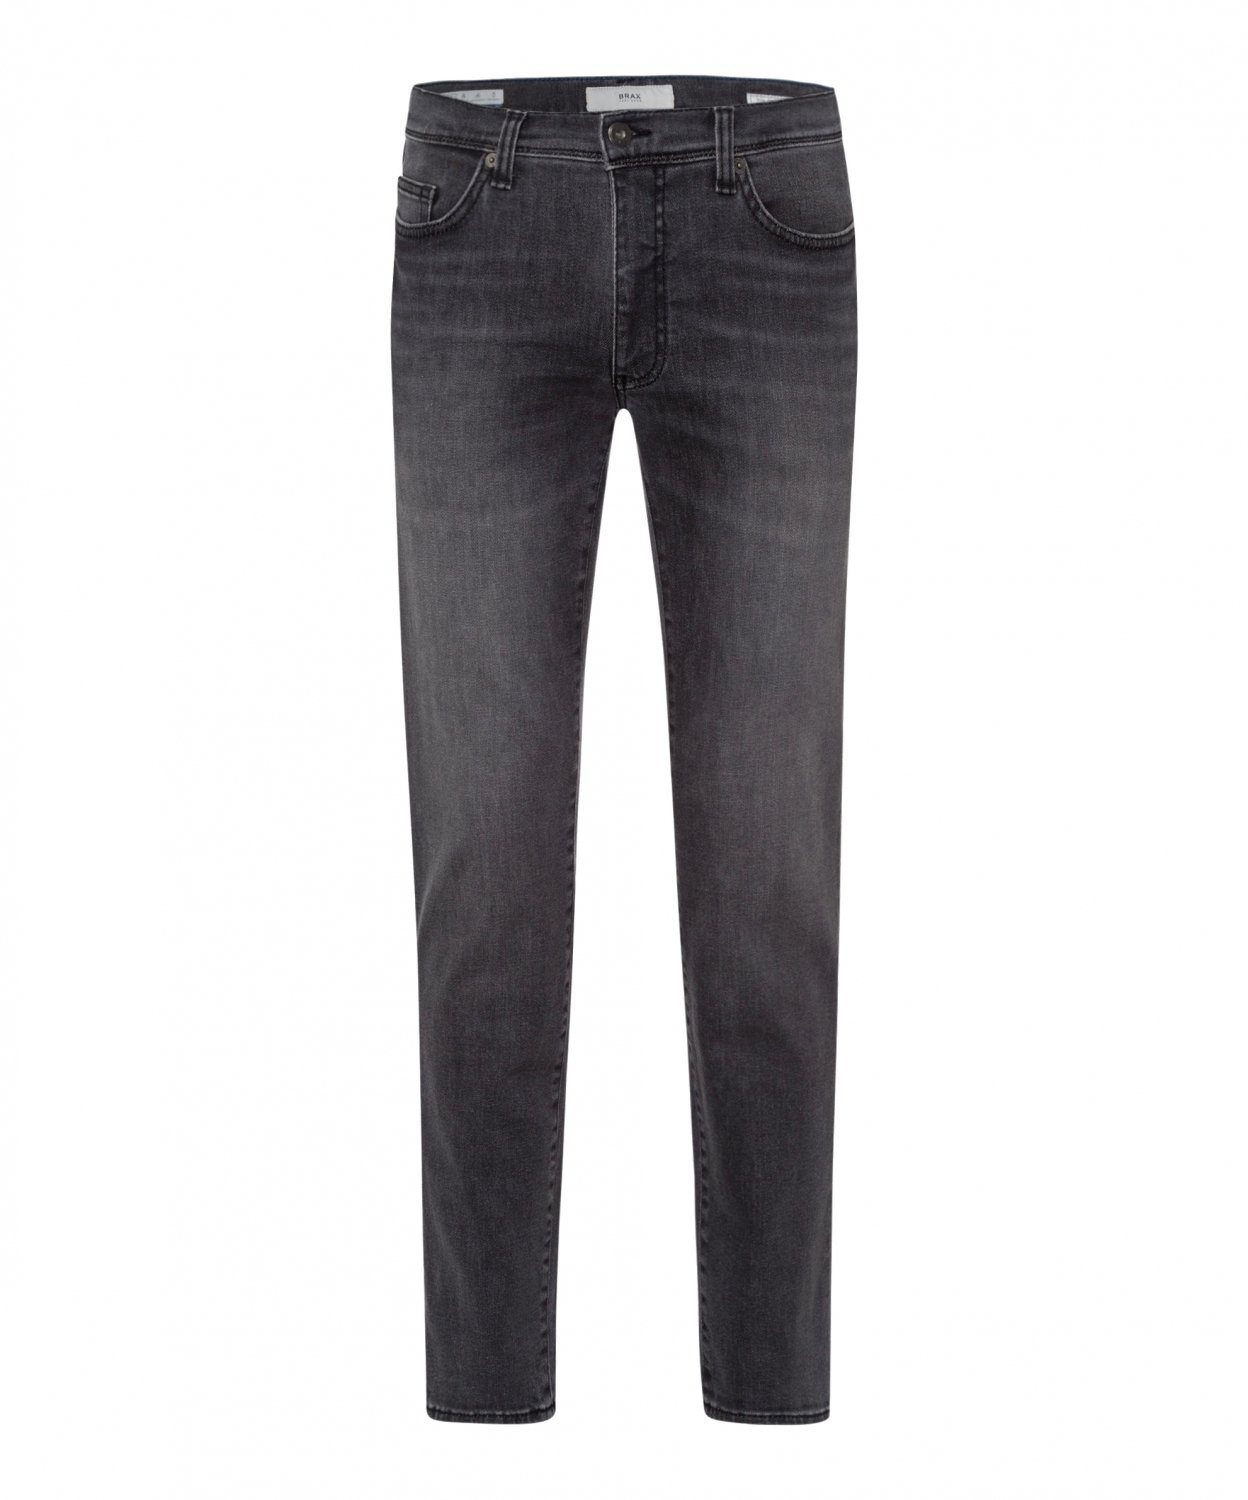 Brax 5-Pocket-Hose Style Cadiz Jeans Herren steel grey